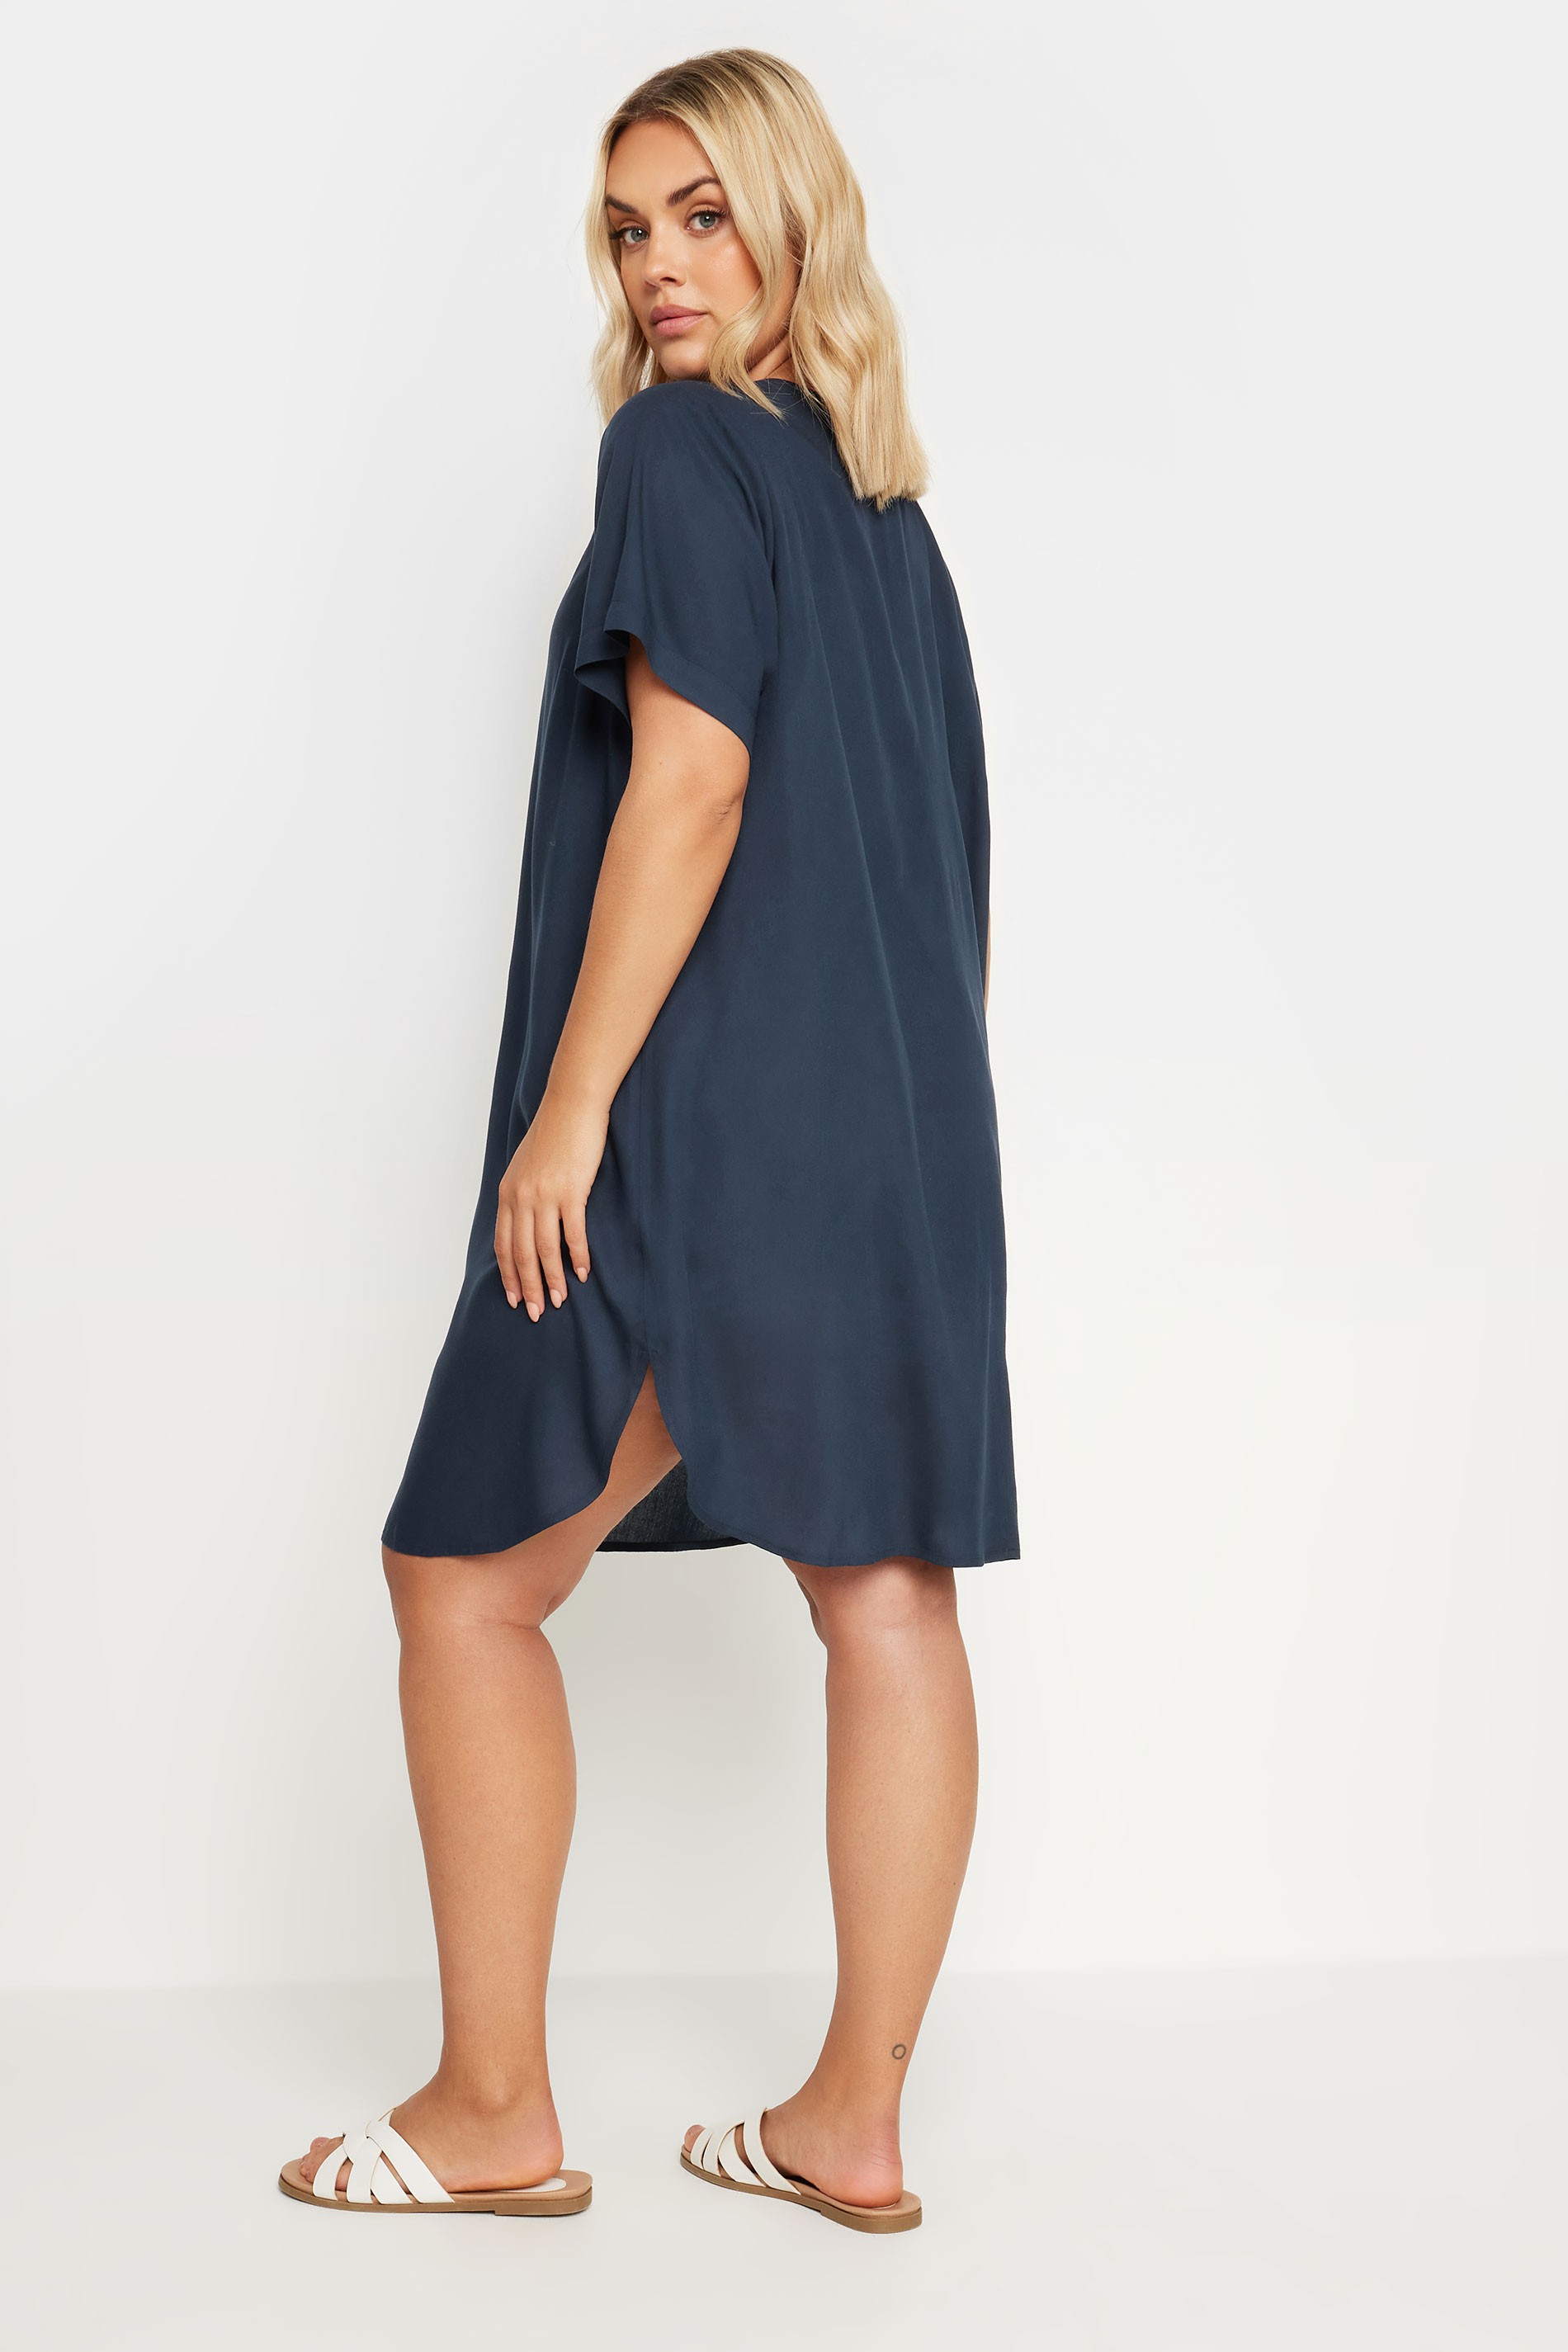 YOURS Plus Size Navy Blue Short Sleeve Tunic Dress | Yours Clothing 3